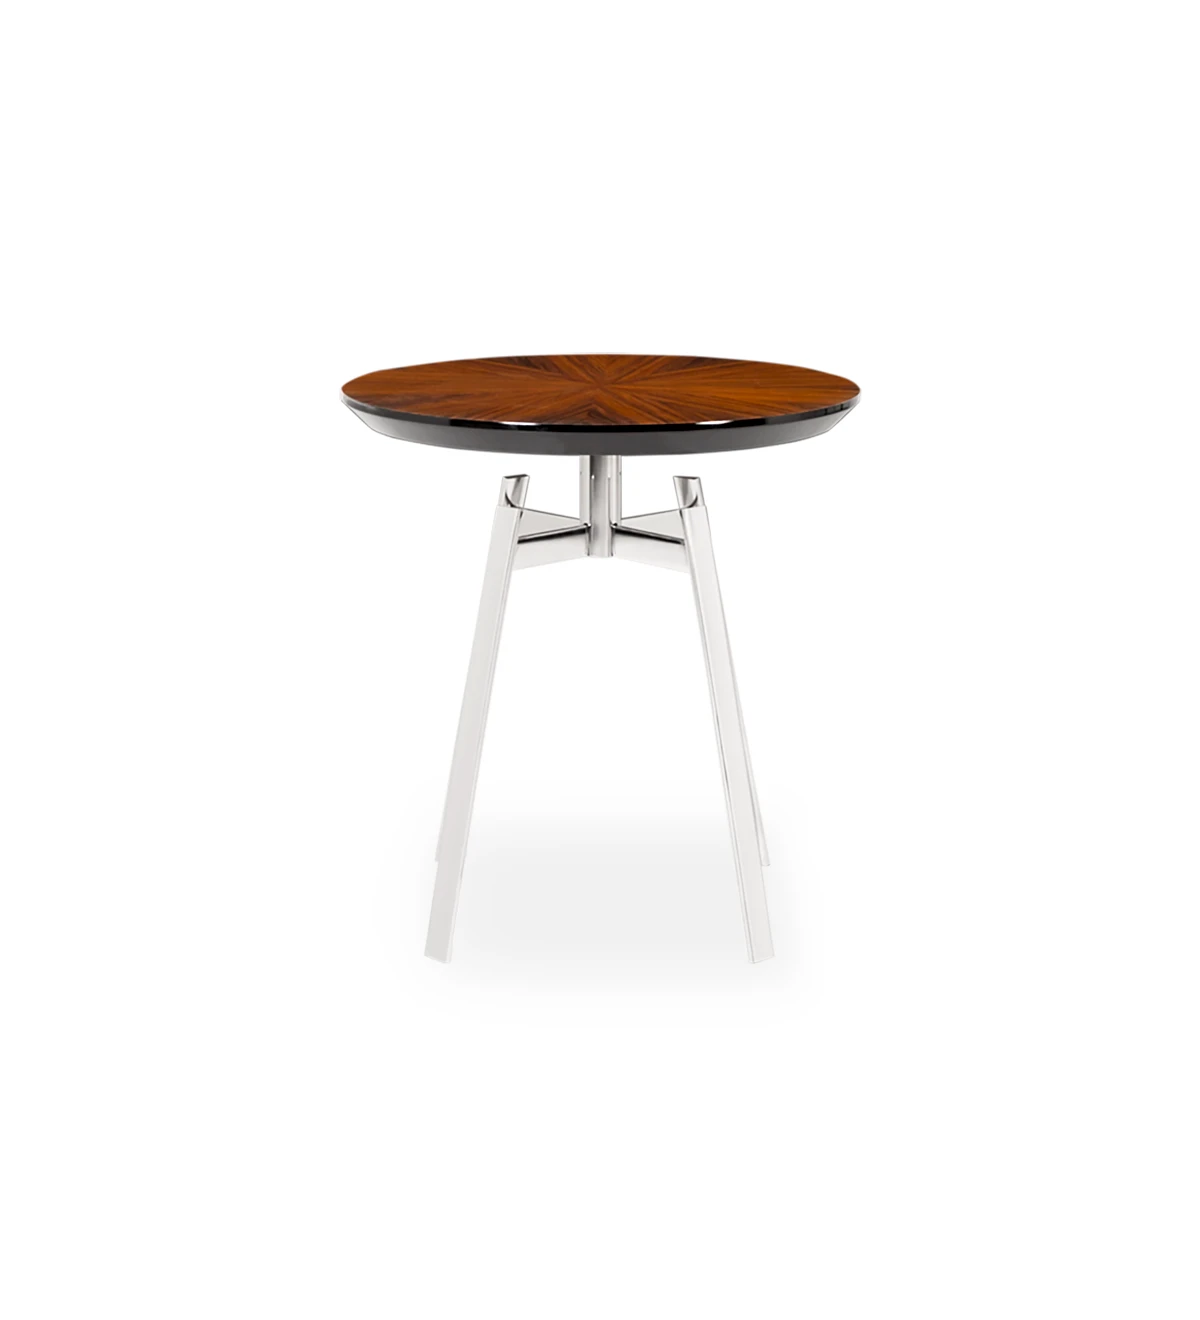 Table d'Appui Tokyo ronde, plateau en palissandre brillant, pied en acier inoxydable, Ø 48,5 cm.